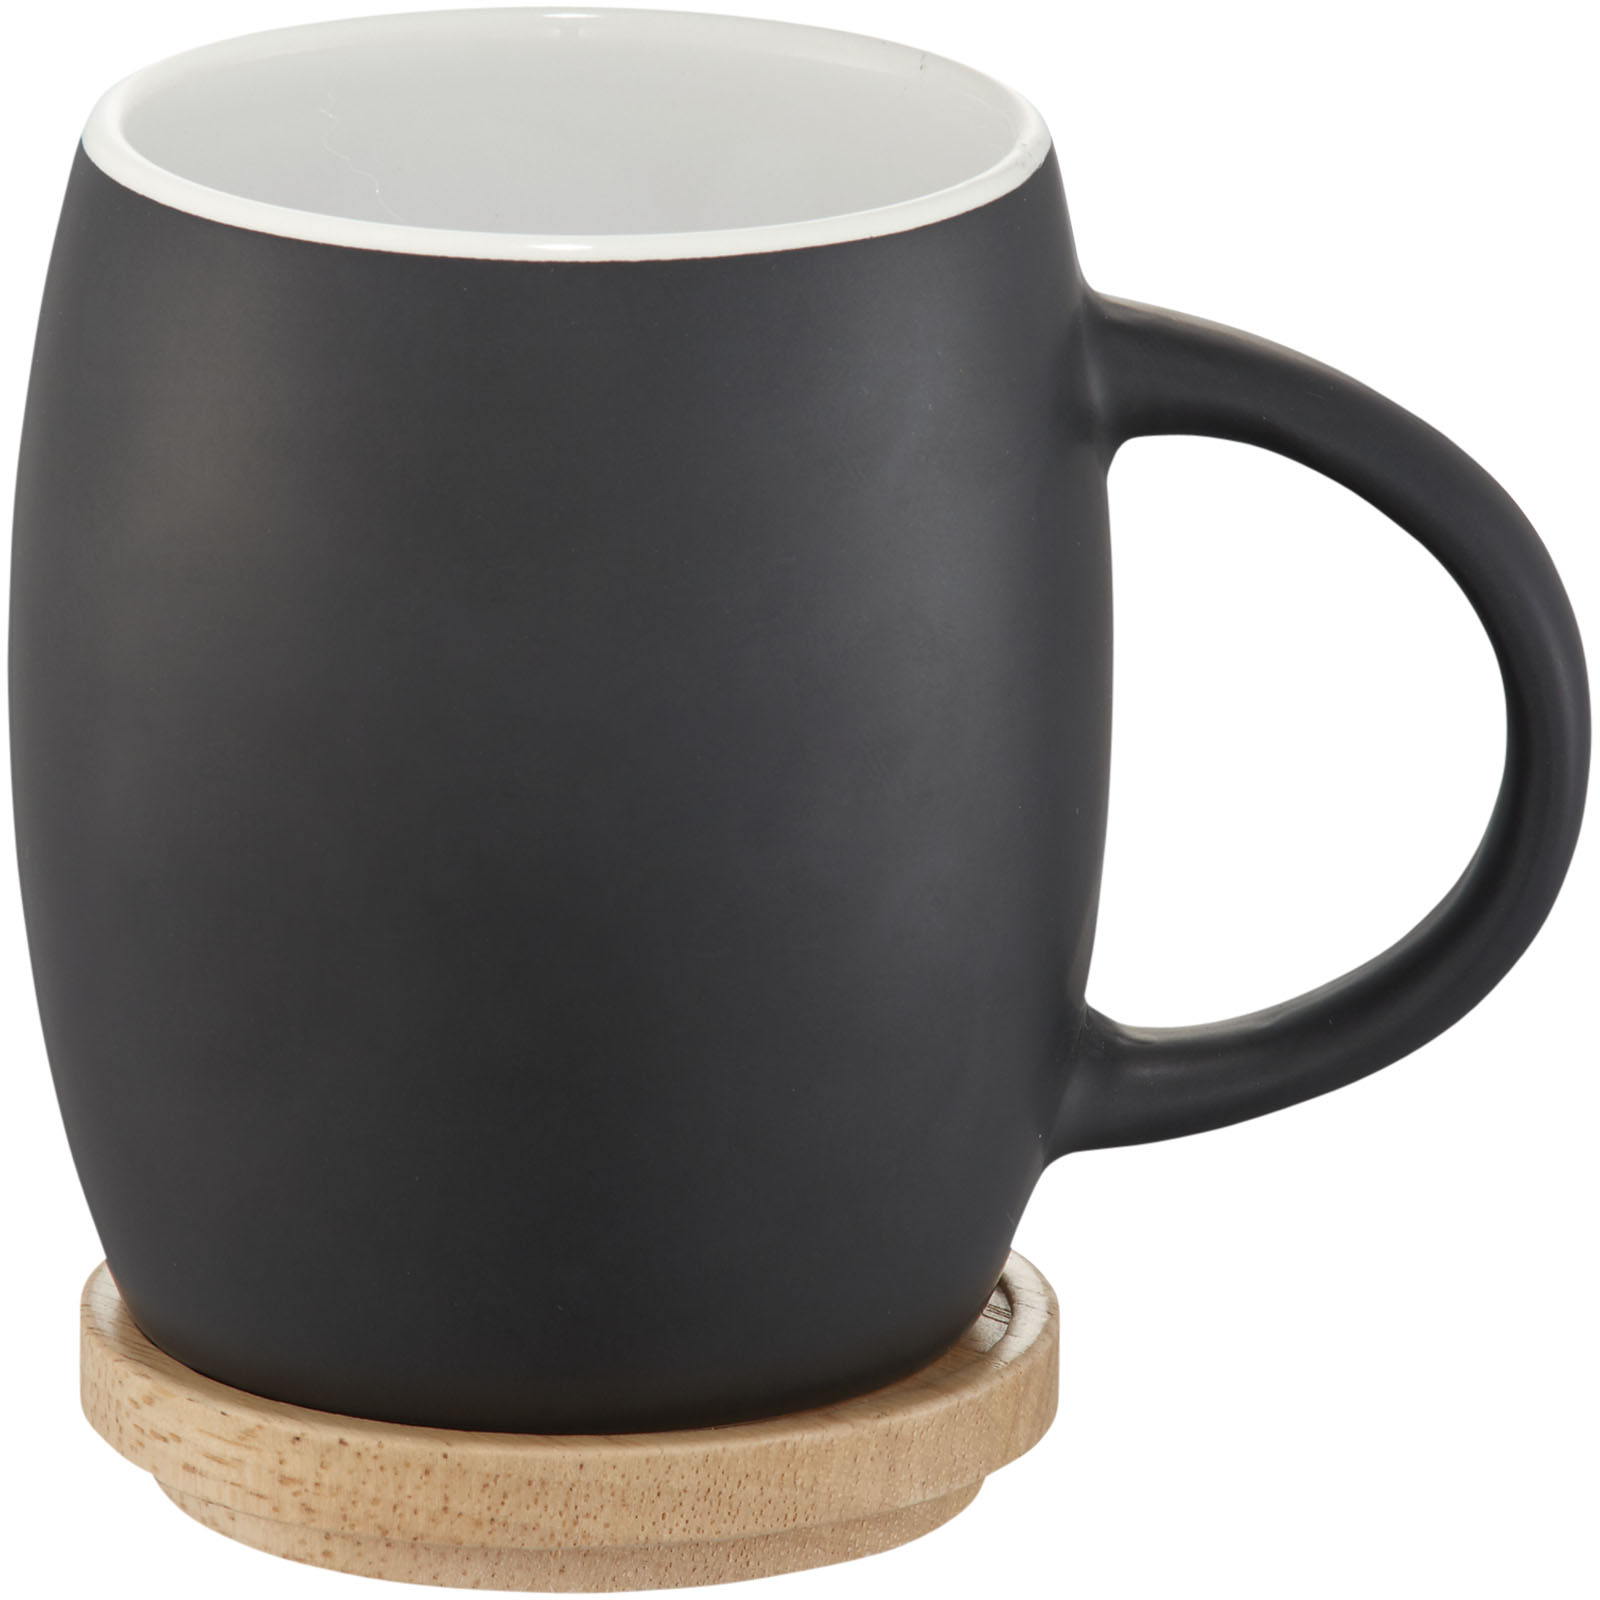 Ceramic Mug with Heart Design - Filkins - Upper Whitley